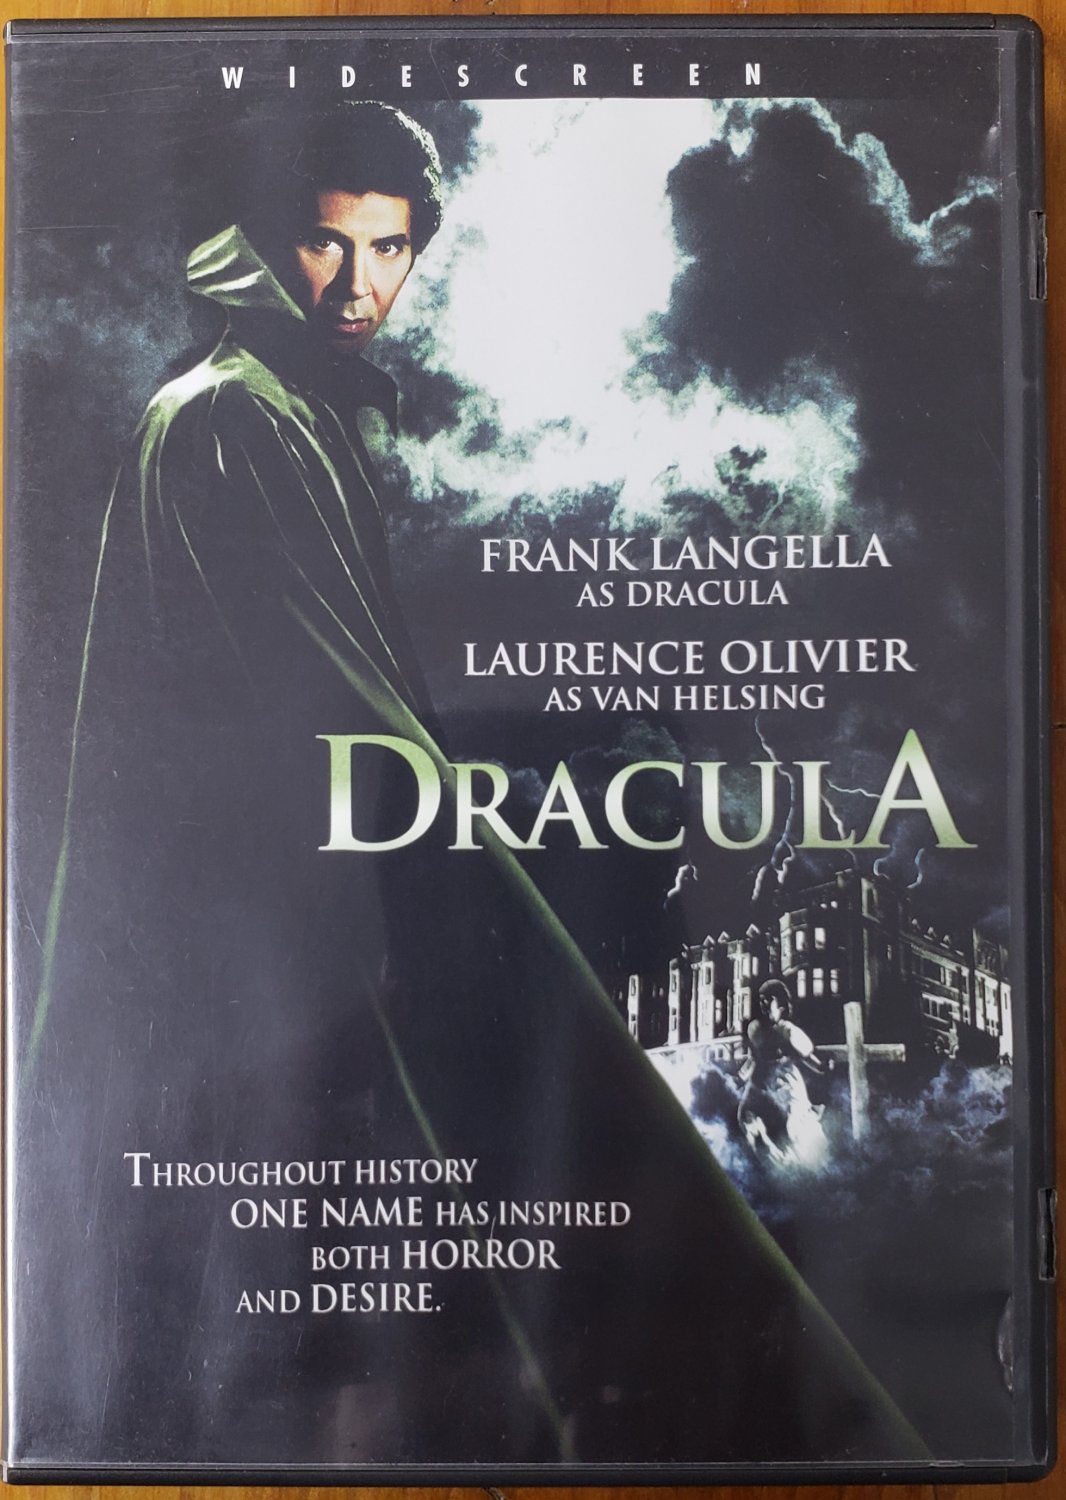 DRACULA 1979 DVD WIDESCREEN FRANK LANGELLA LAURENCE OLIVER